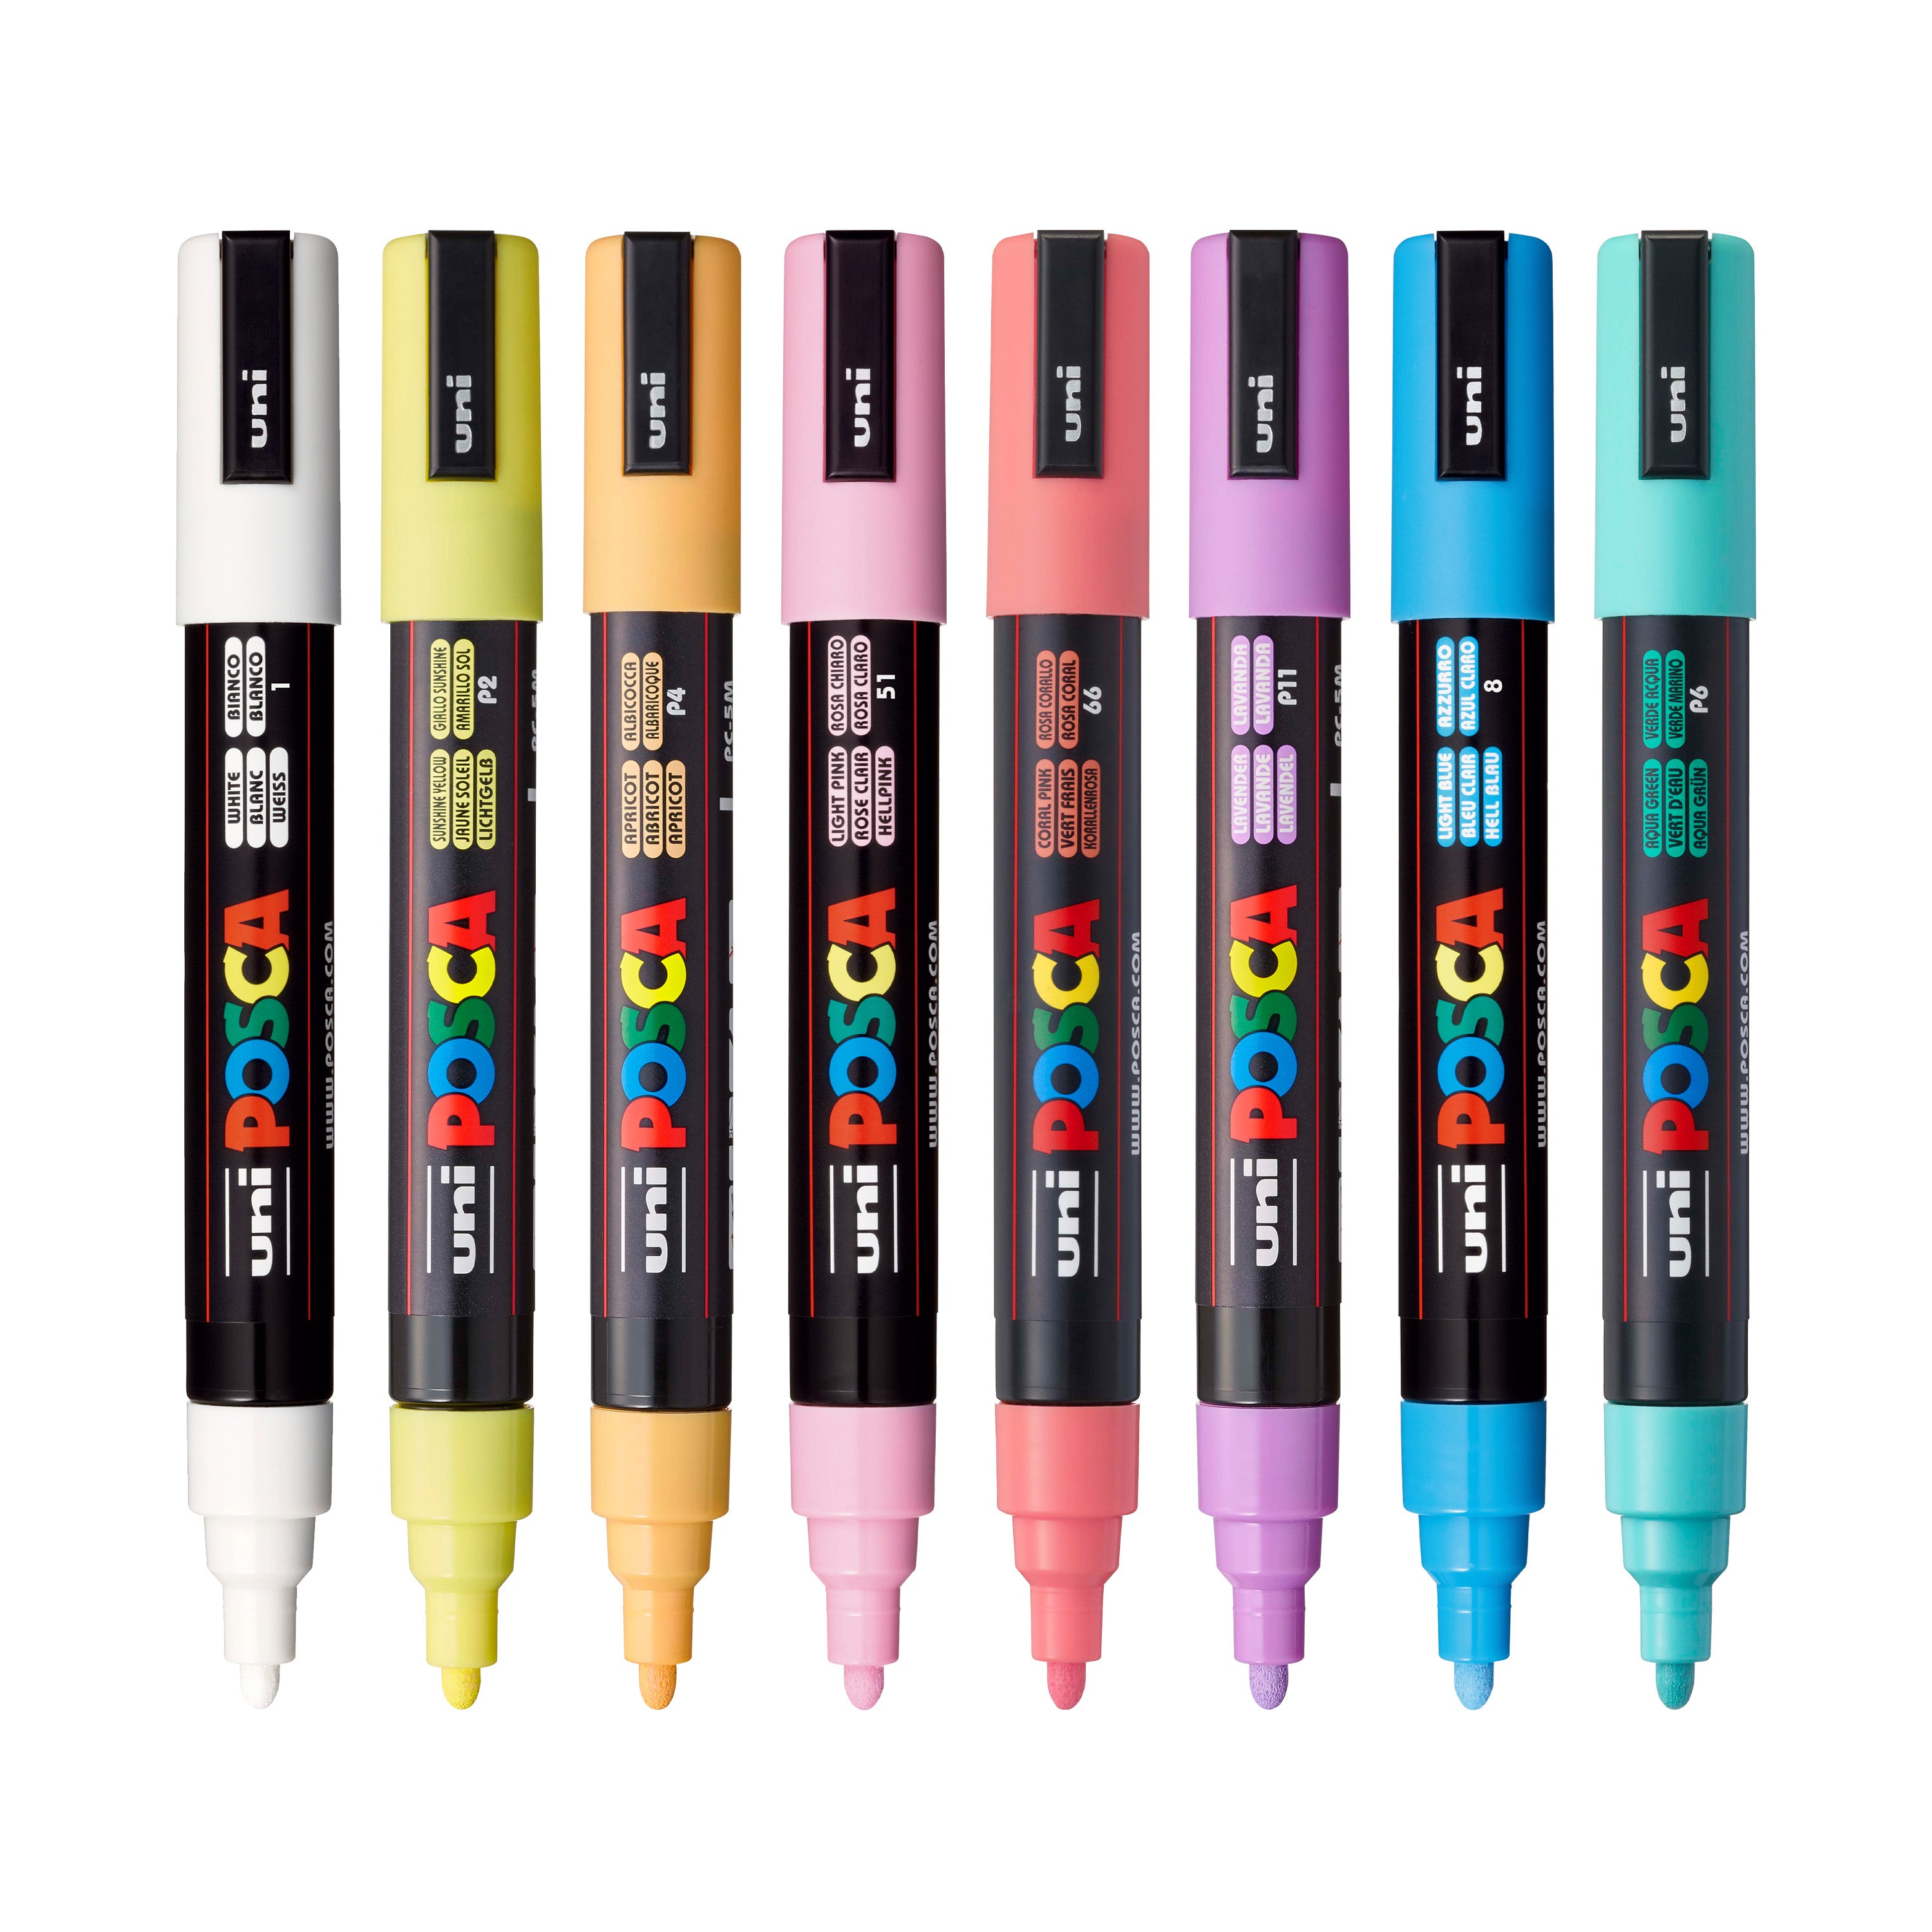 Posca Full Set of 8 Acrylic Paint Pens - $14.97